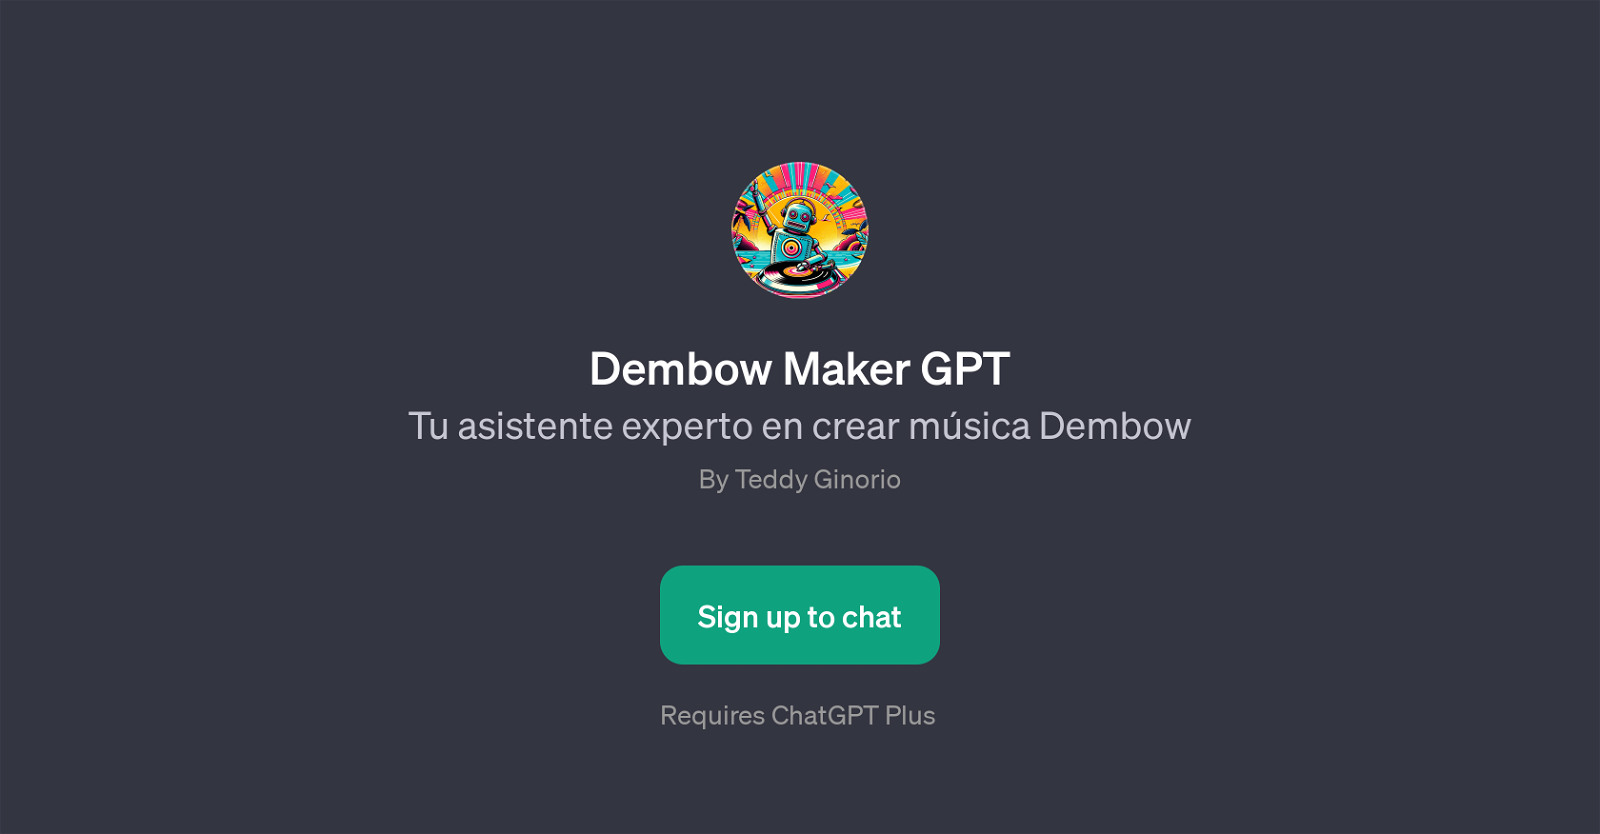 Dembow Maker GPT website